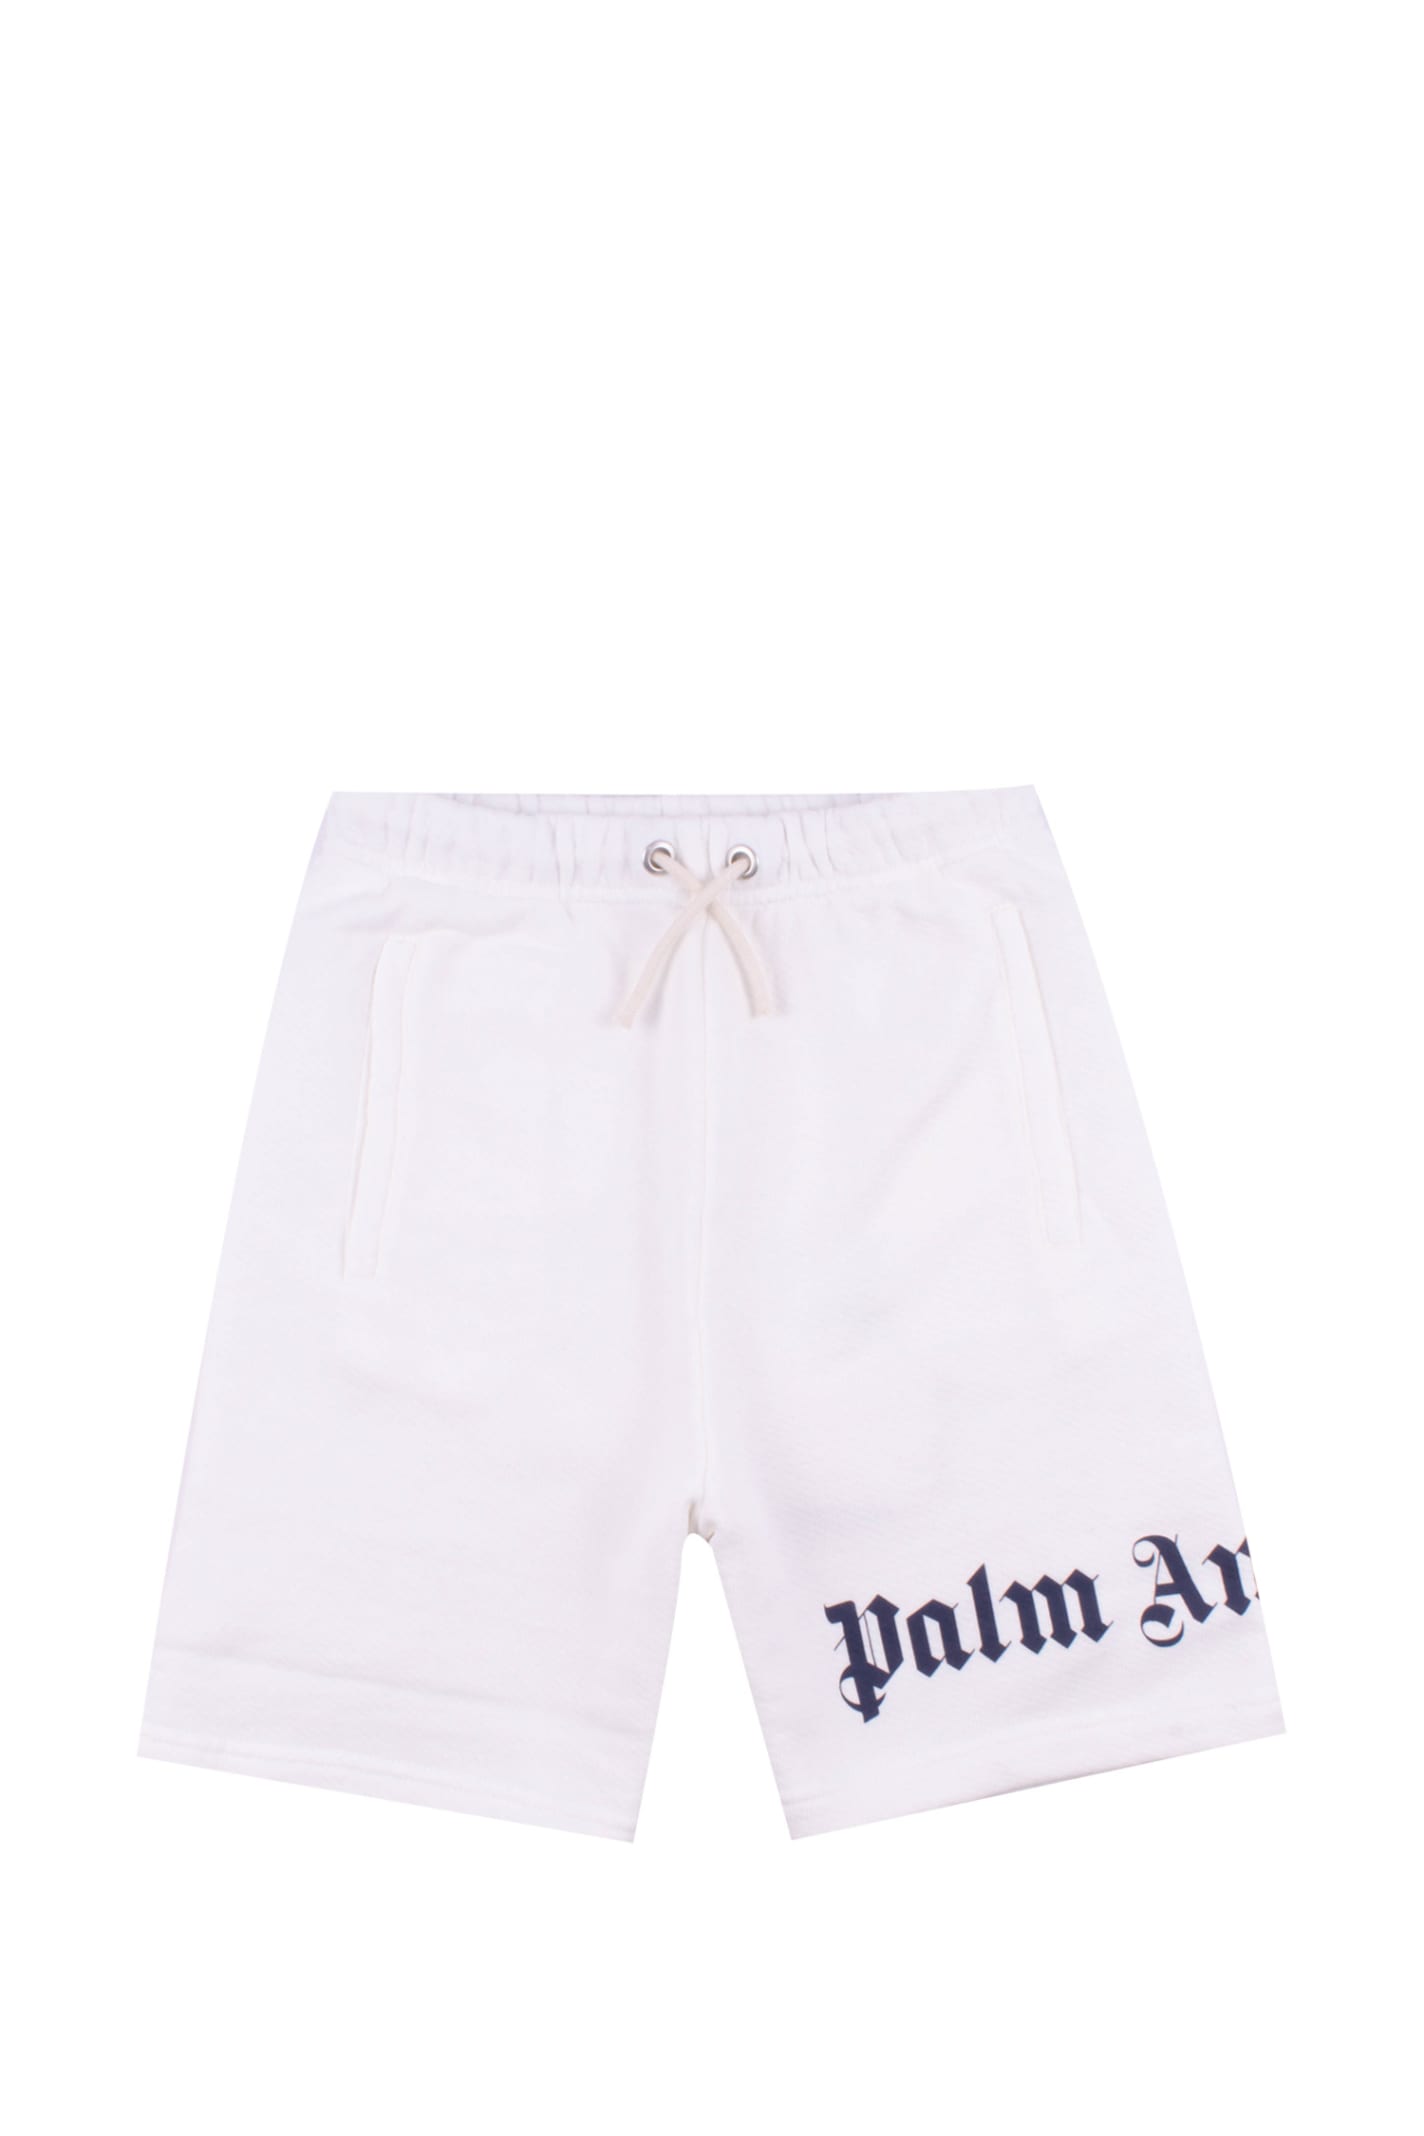 Palm Angels Cotton Shorts